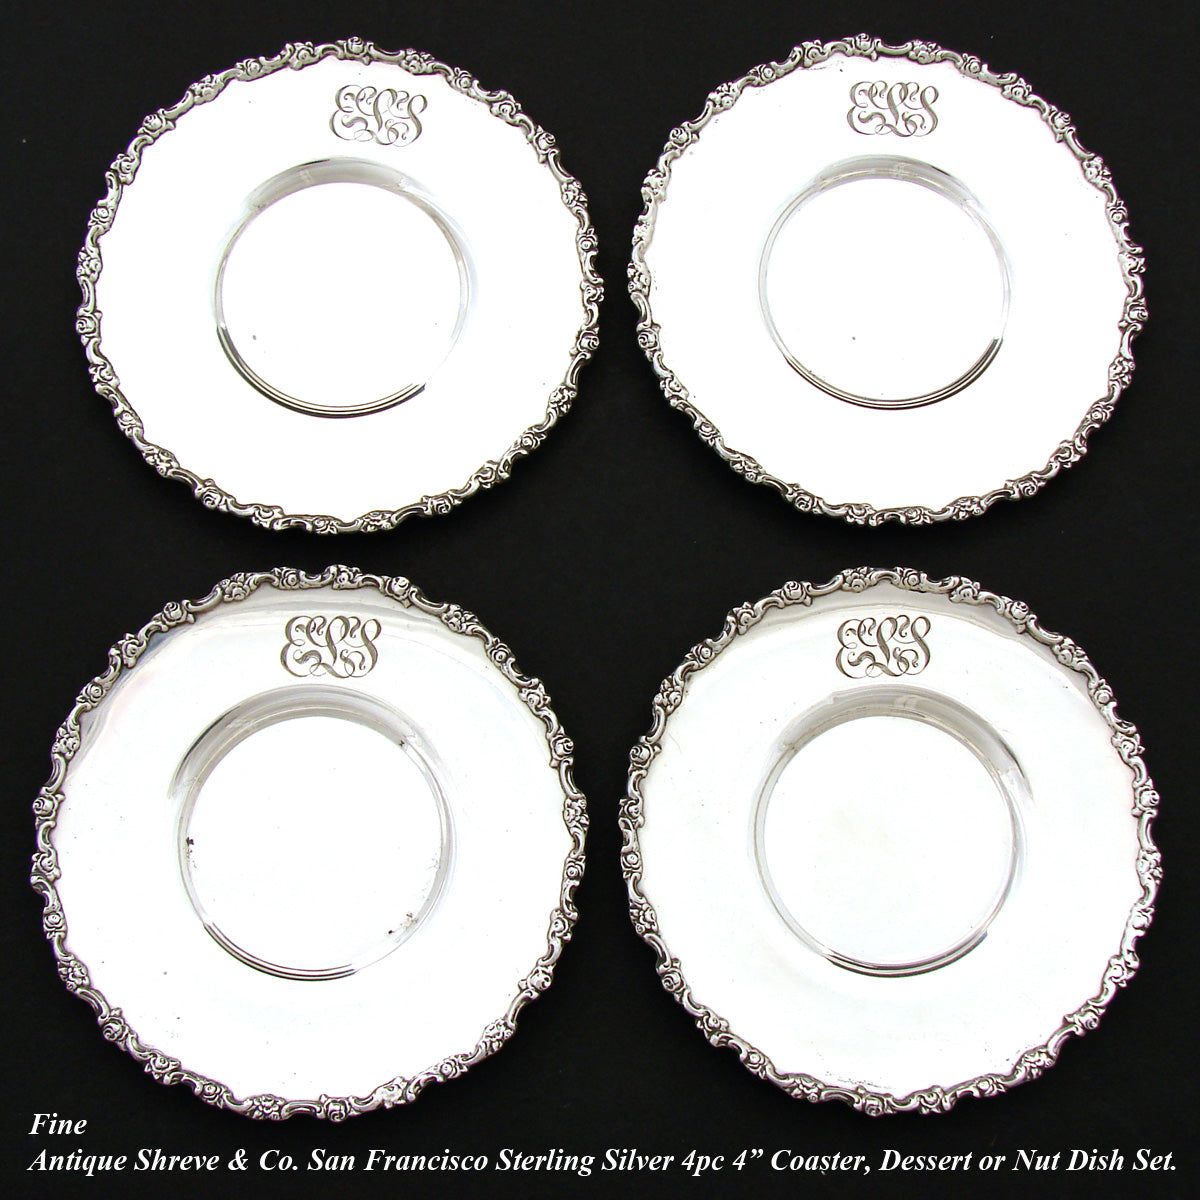 Antique Shreve & Co. San Francisco Sterling Silver 4pc 4" Coaster, Dessert or Nut Dish Set